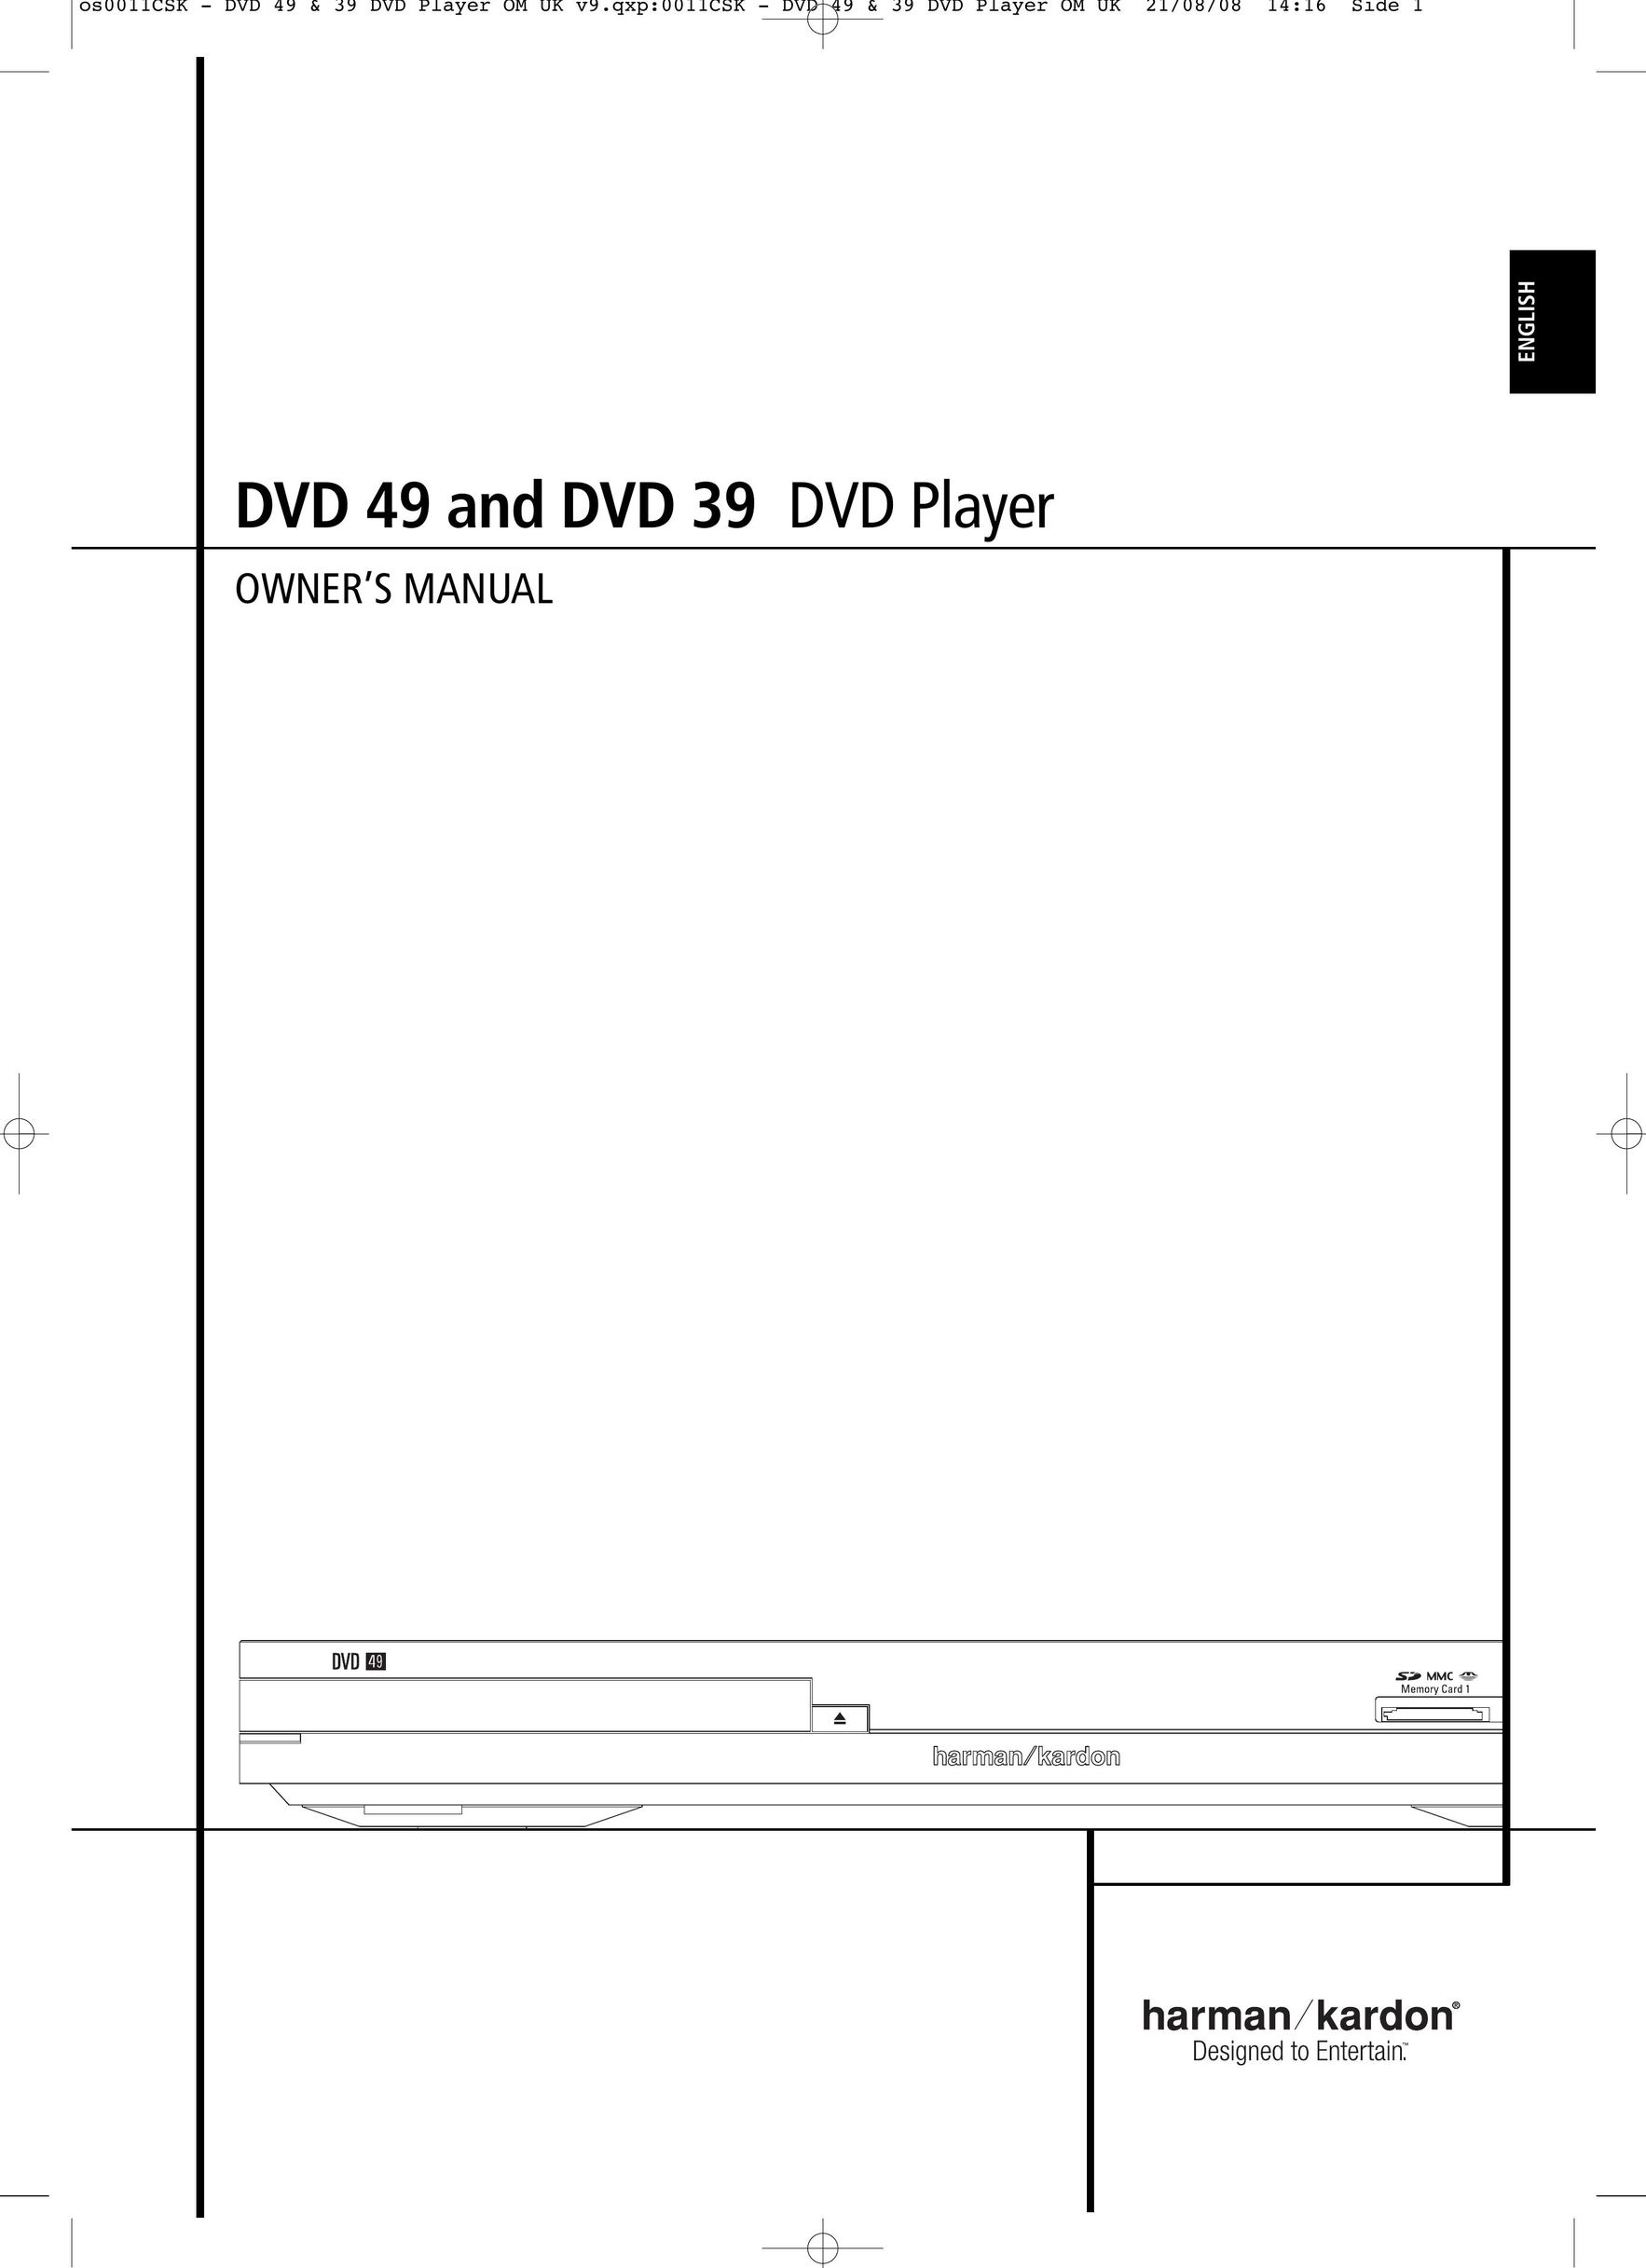 Harman-Kardon DVD 49 DVD Player User Manual